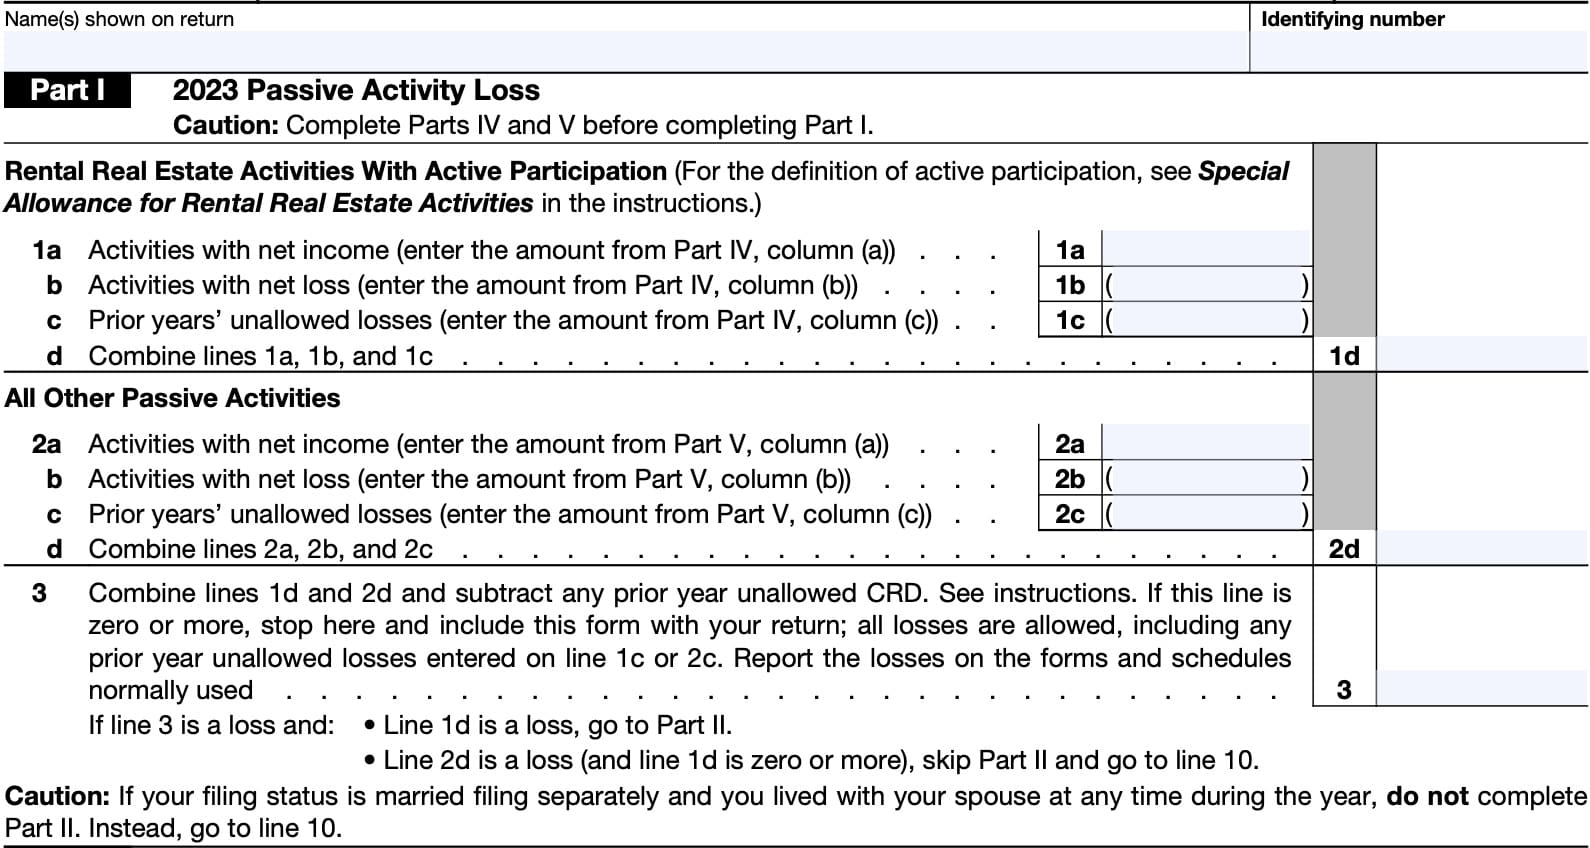 IRS Form 8582, part I: Passive activity loss